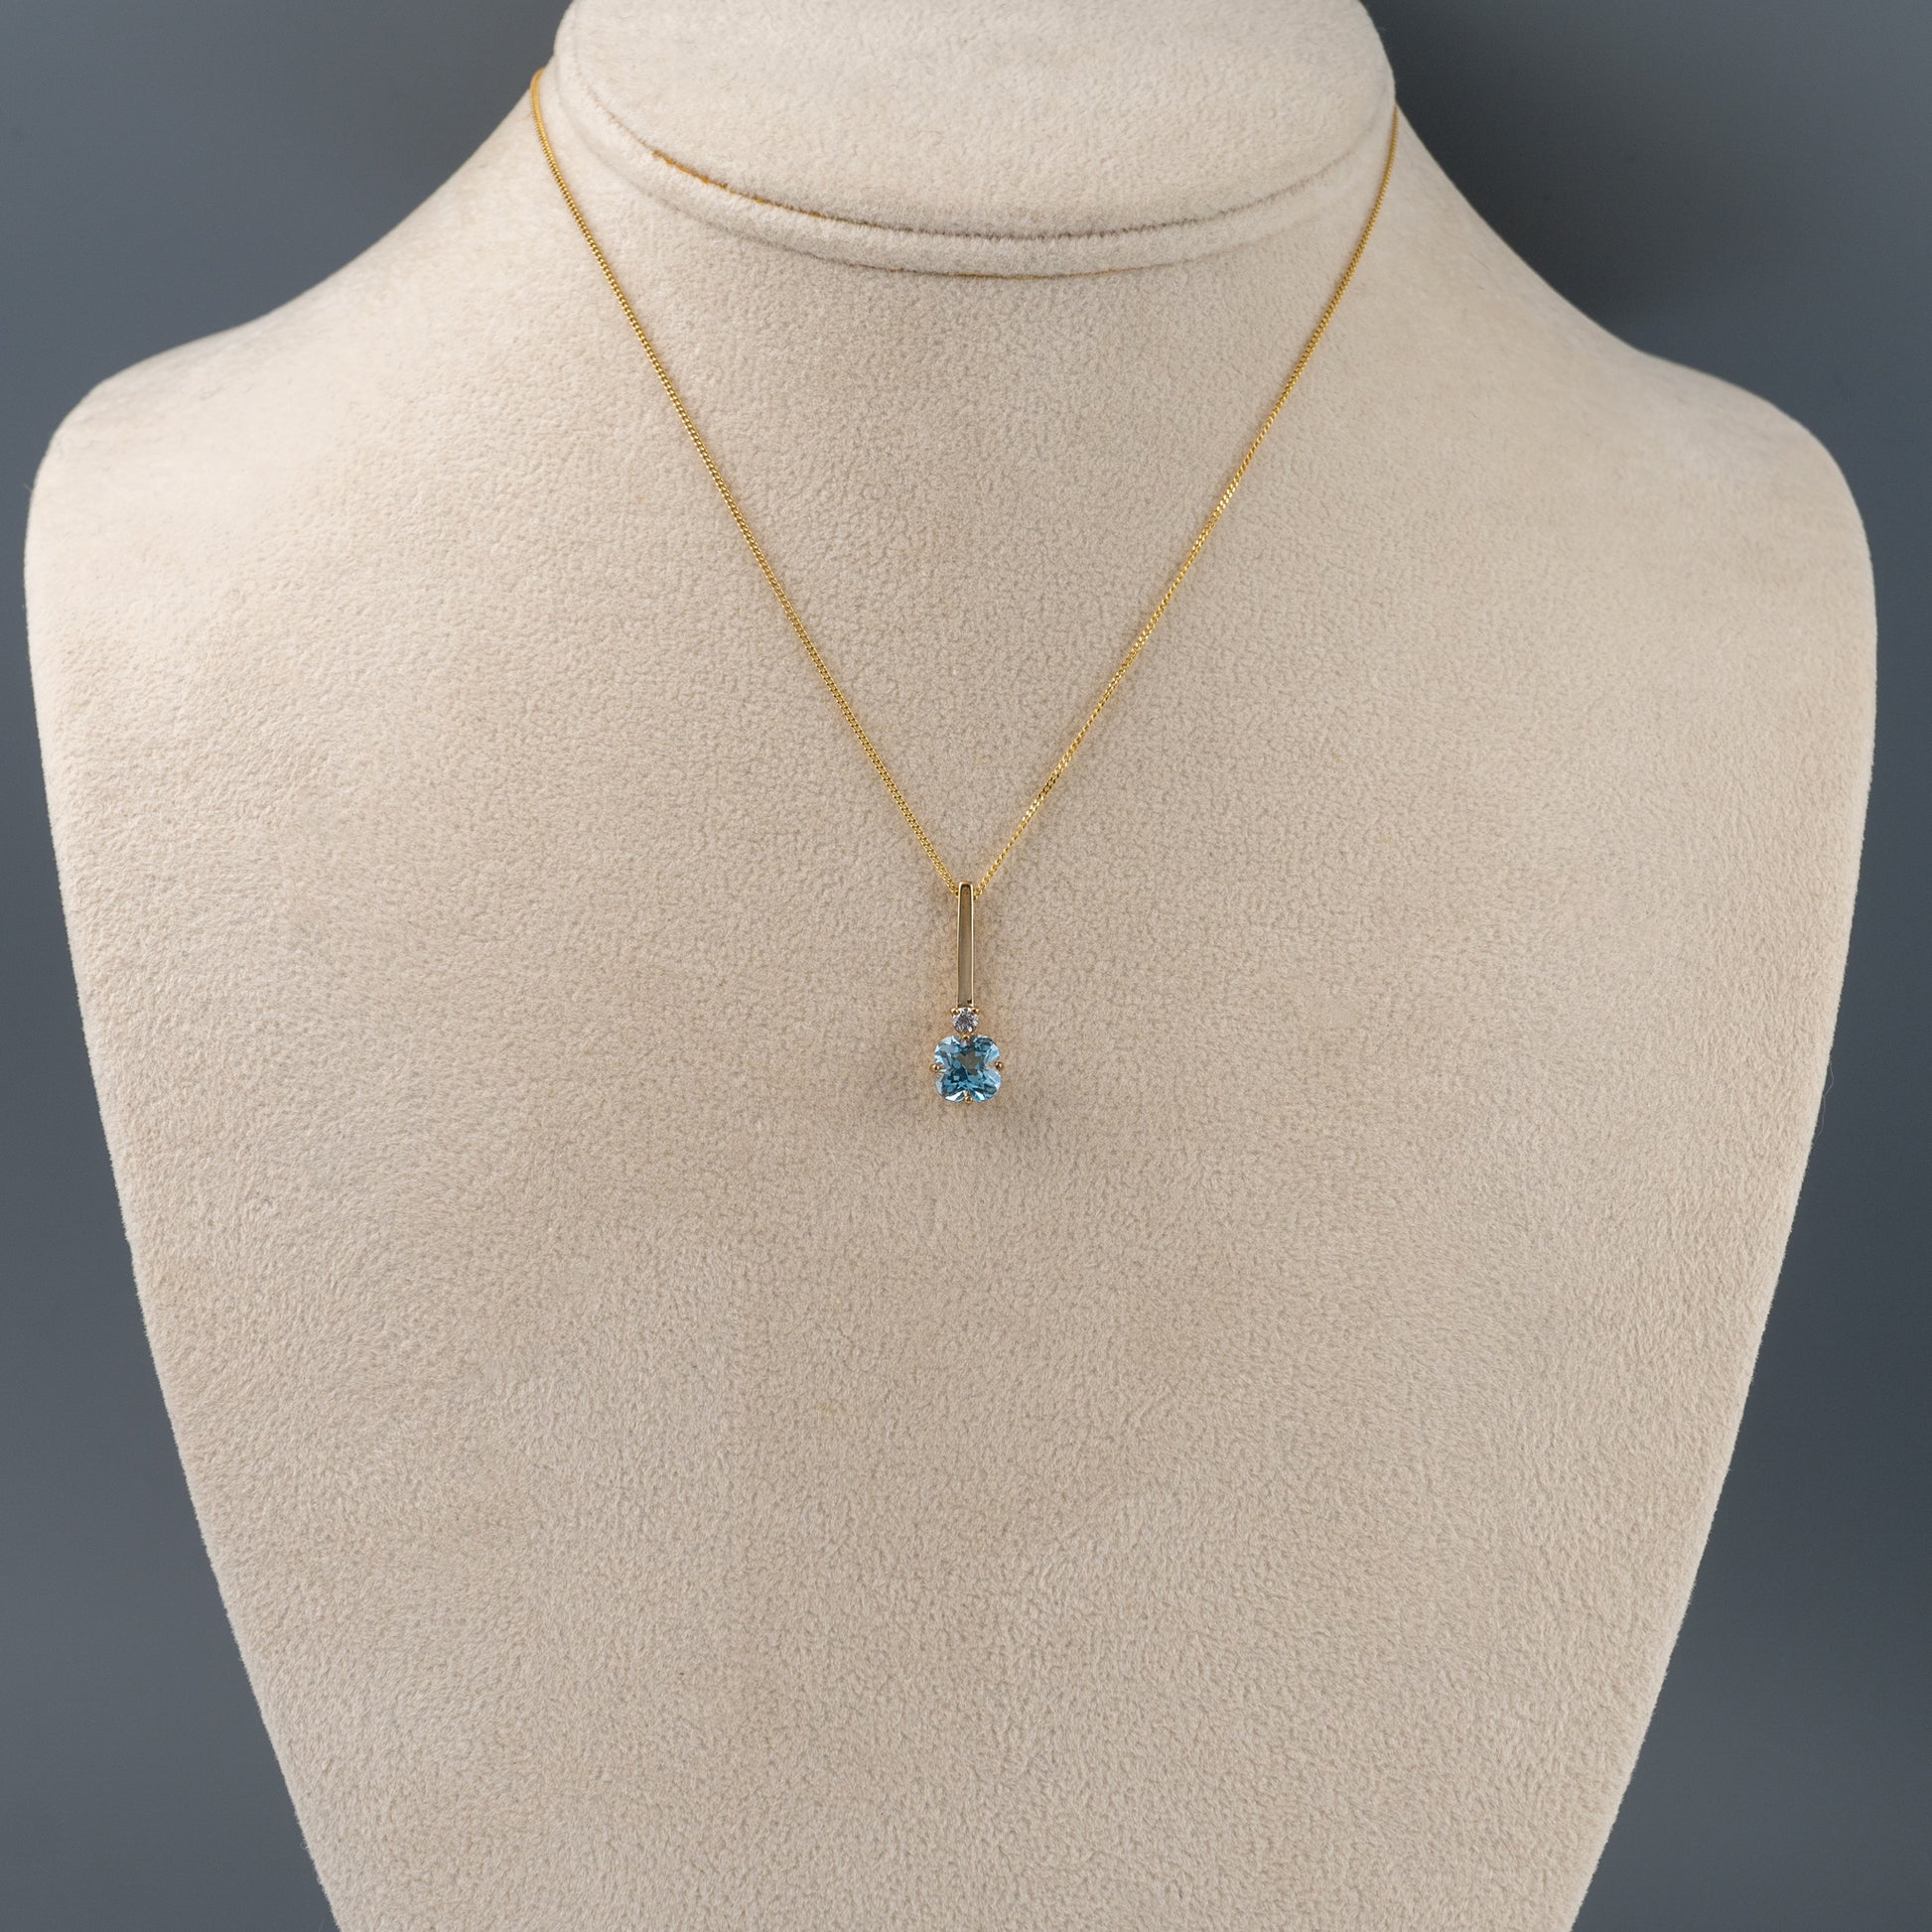 Diamond topaz pendant necklace